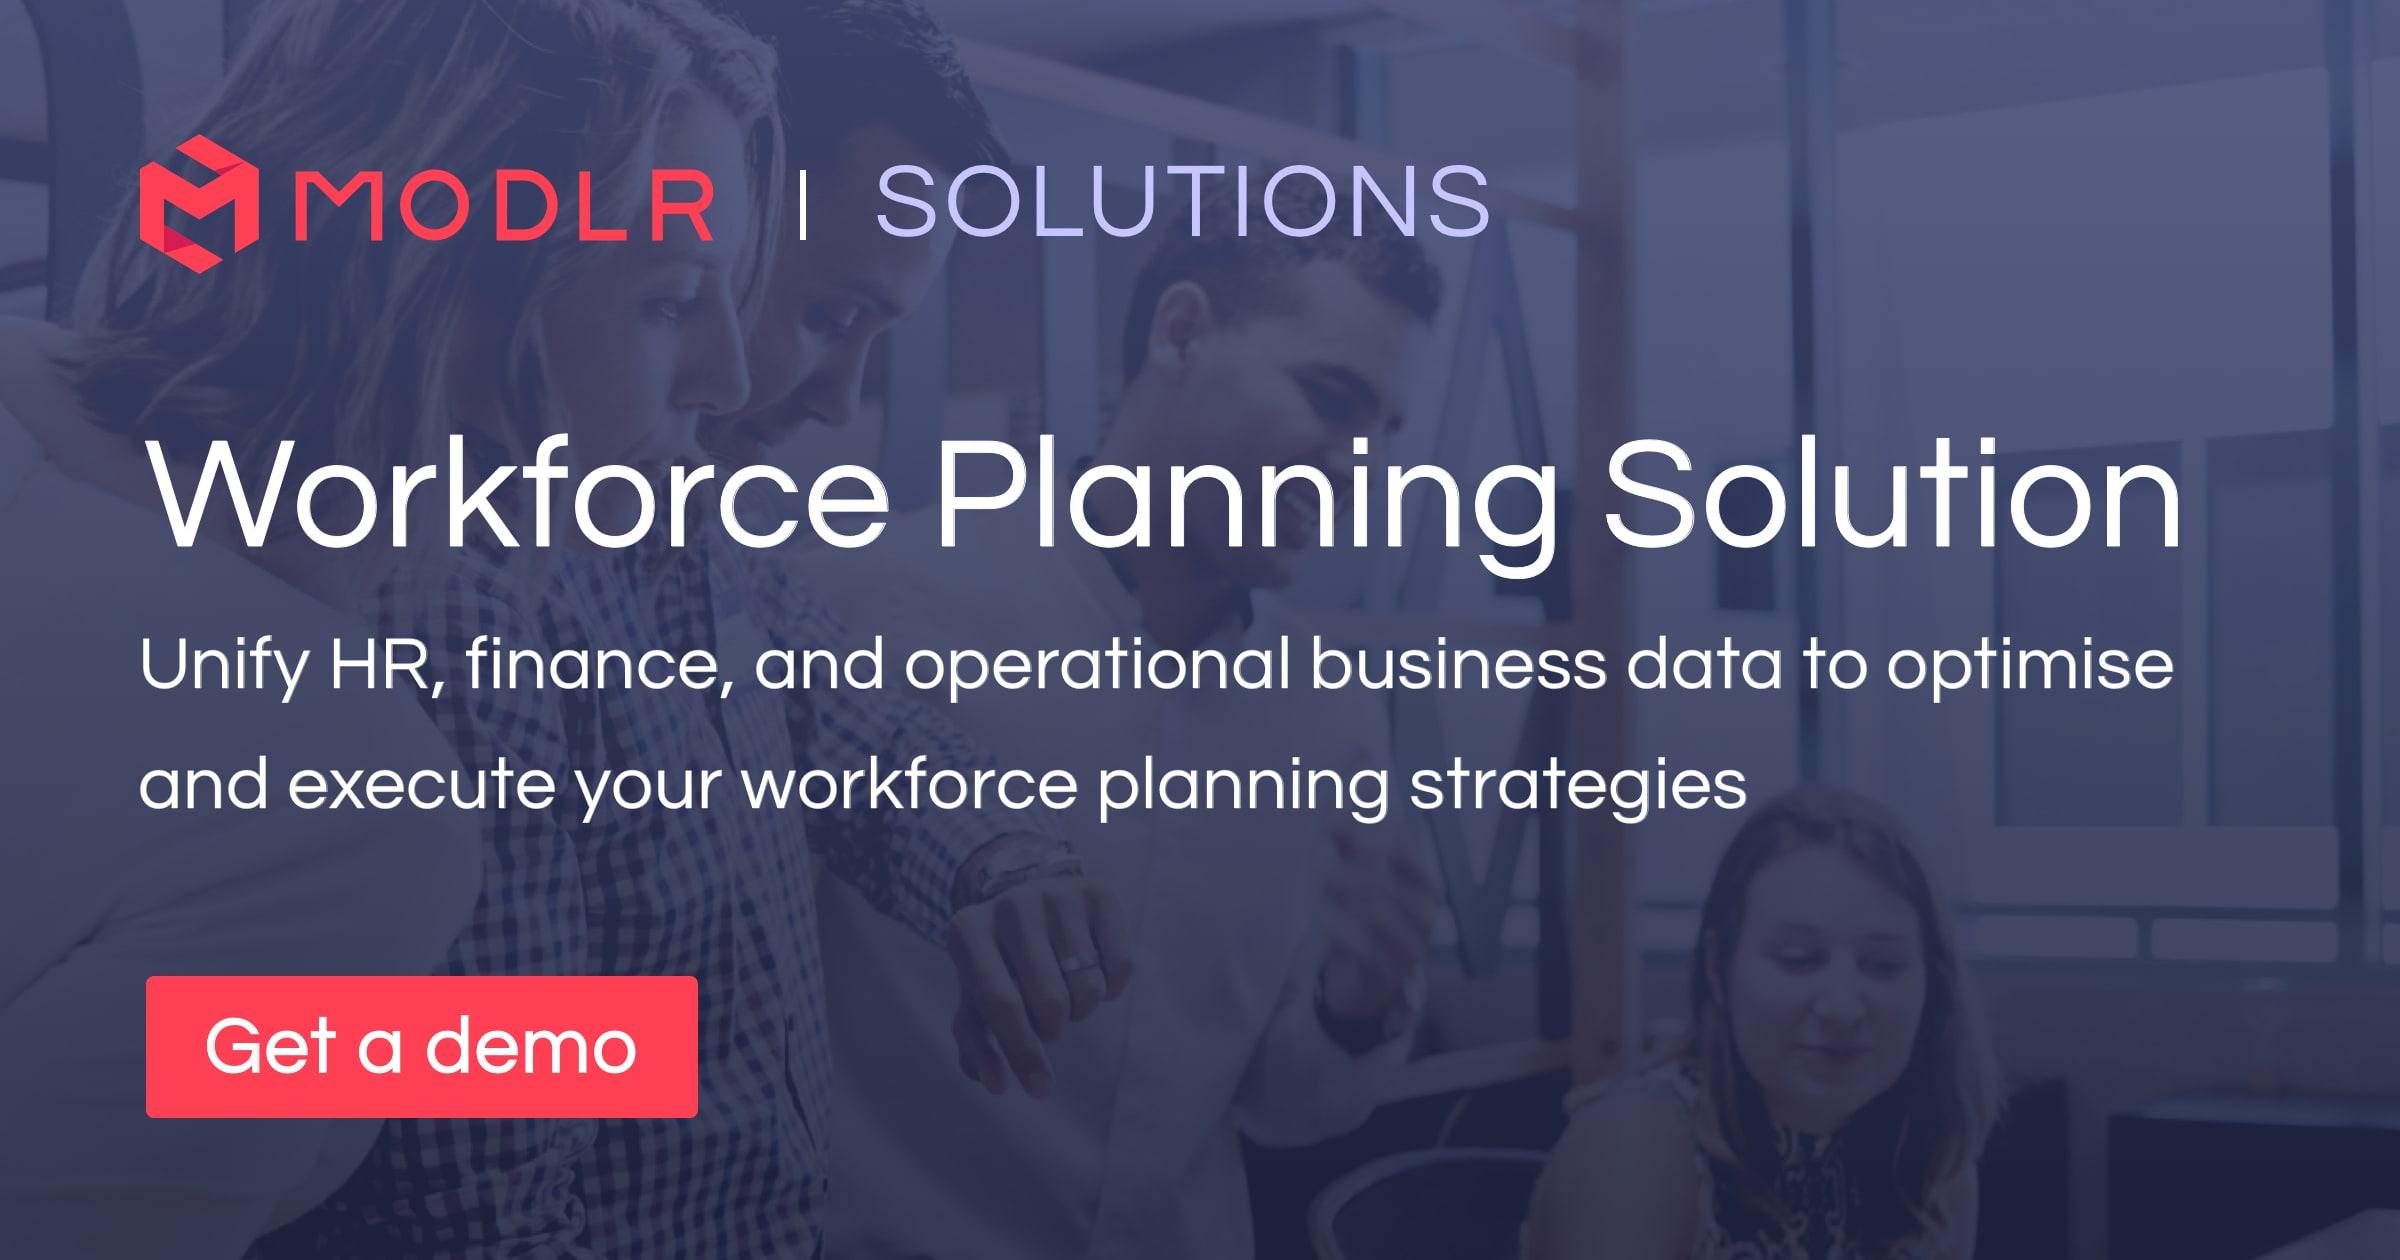 Product MODLR - Solution - Workforce Planning image